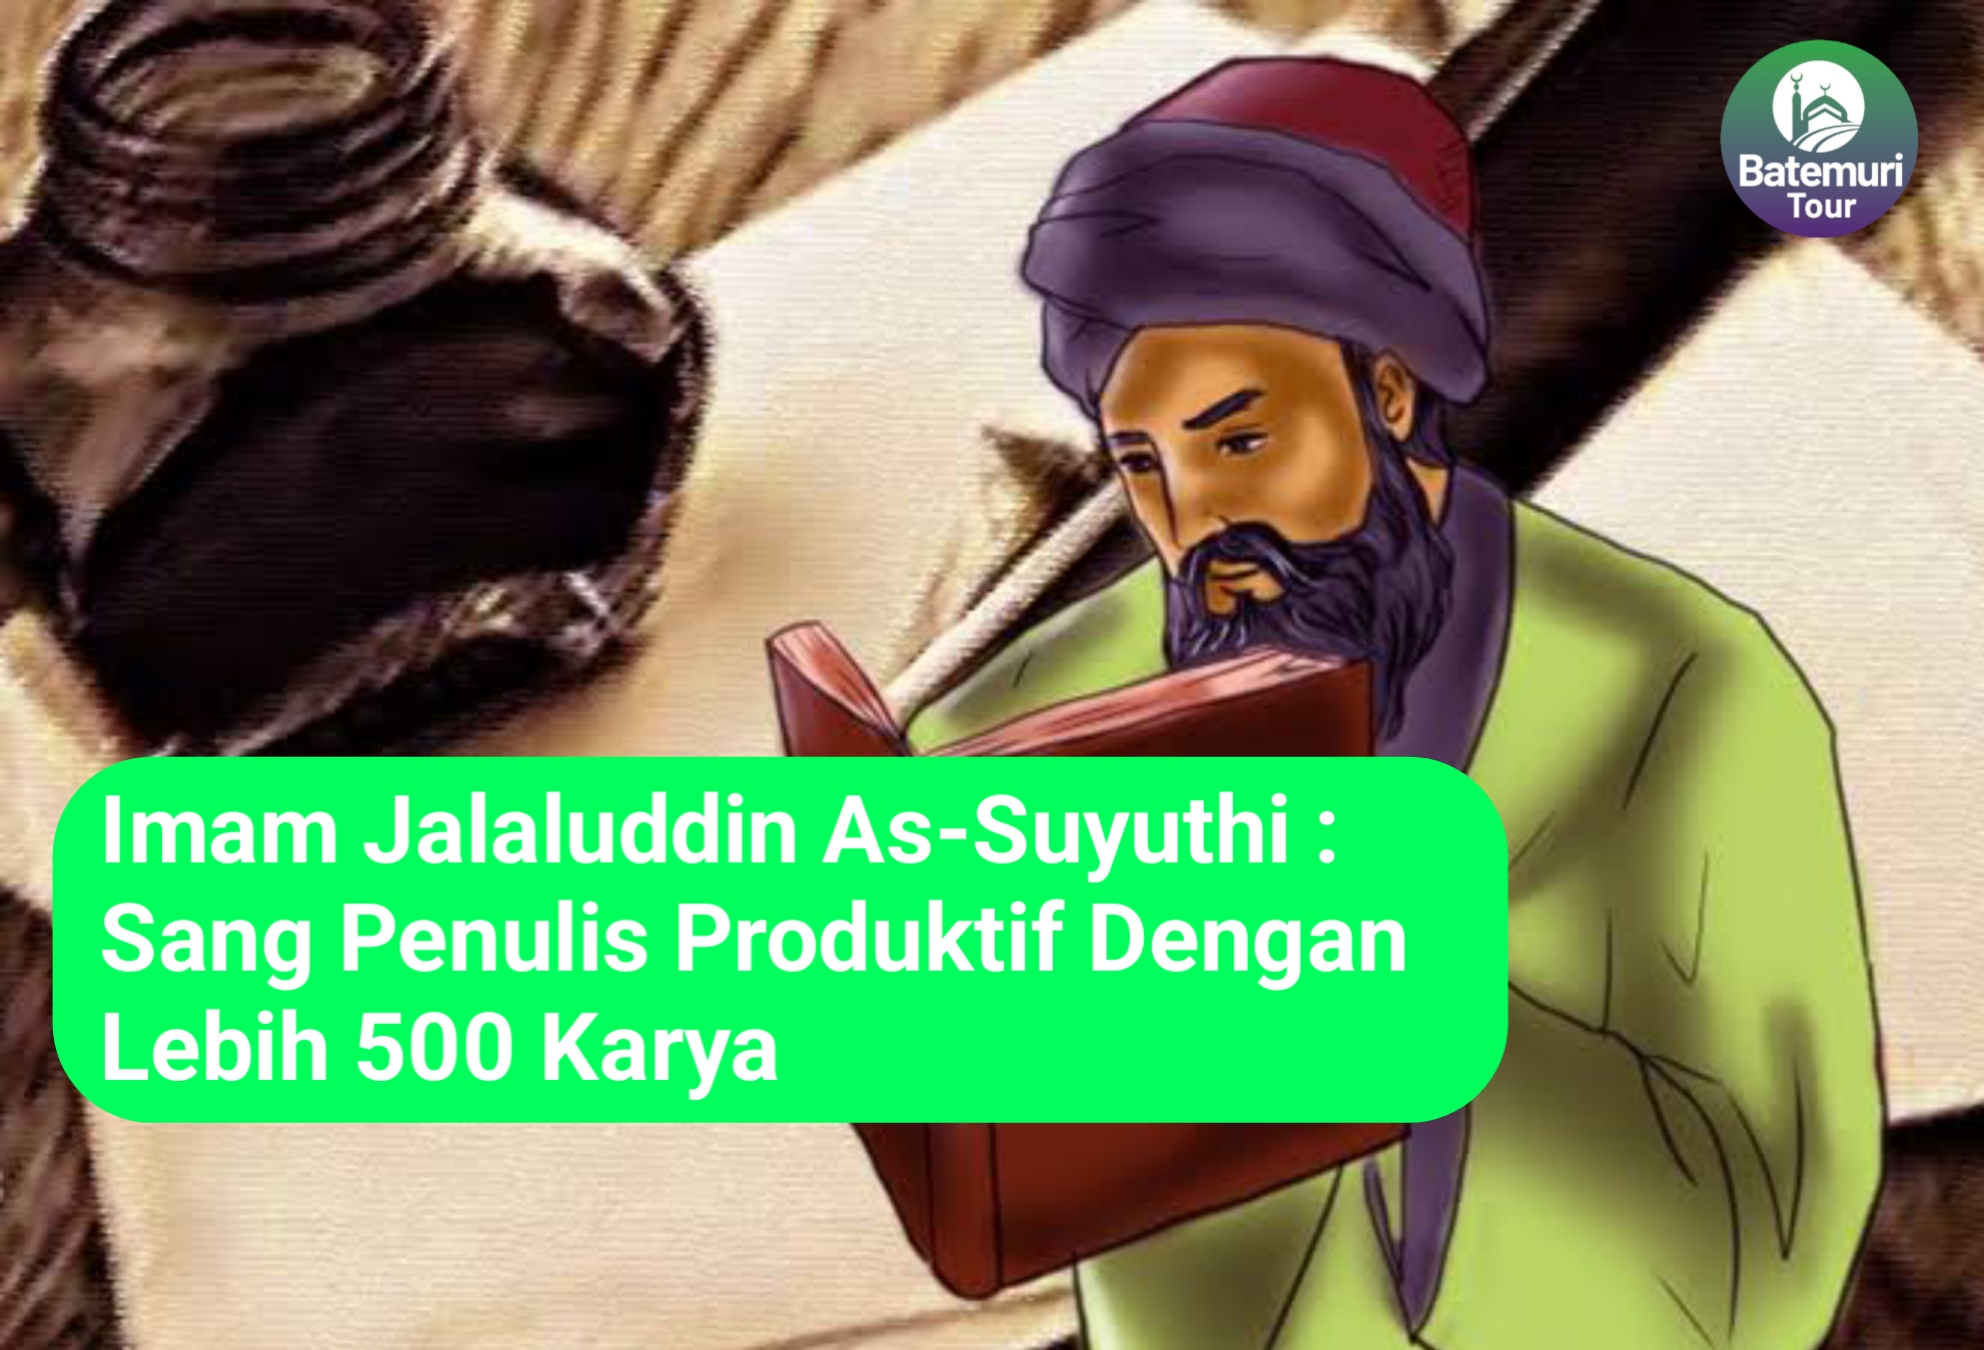 Imam Jalaluddin As-Suyuthi: Sang Penulis Produktif dengan Lebih 500 Karya